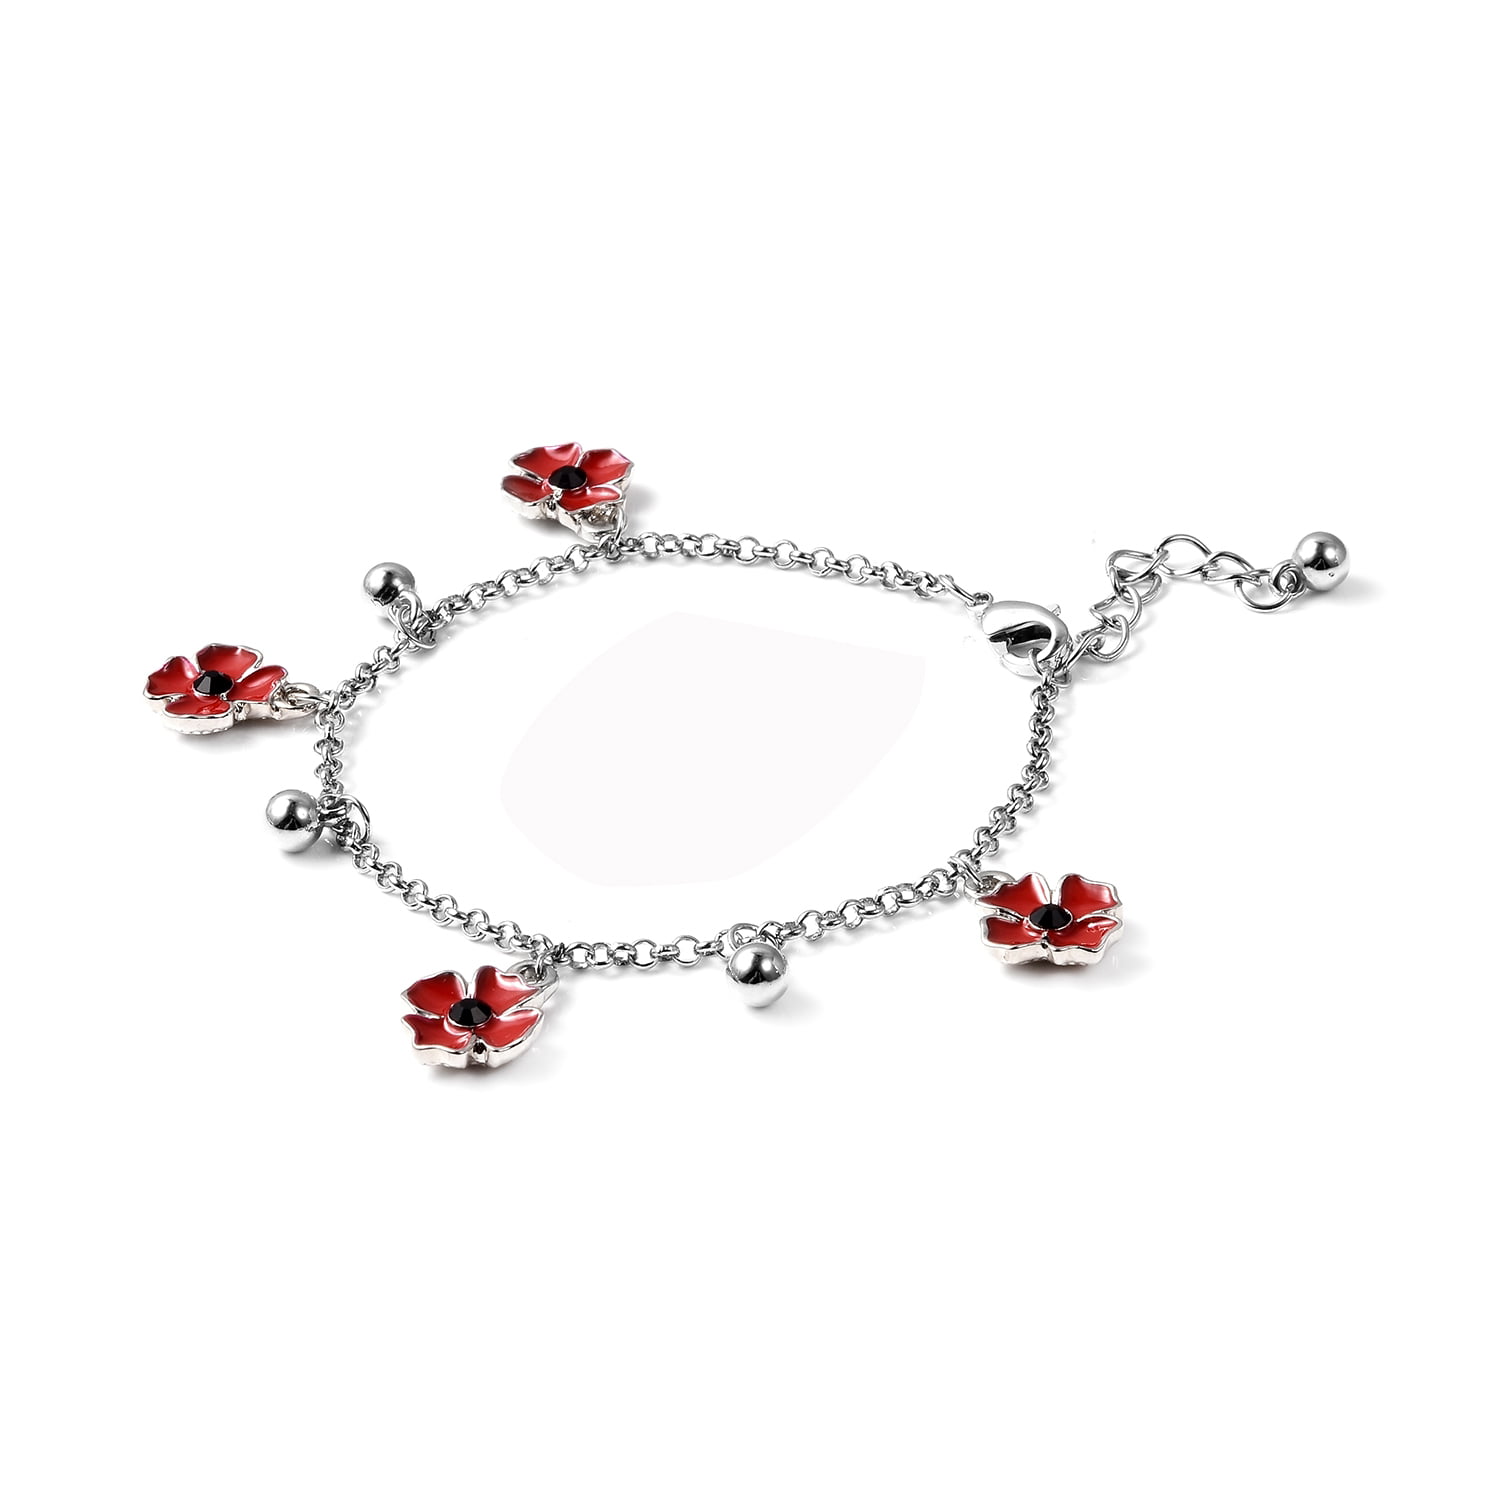 Shop LC Delivering Joy Set of 2 Iron Round Crystal Black Oxidized Silvertone Resin Multi Charm Bracelet for Women 7.5